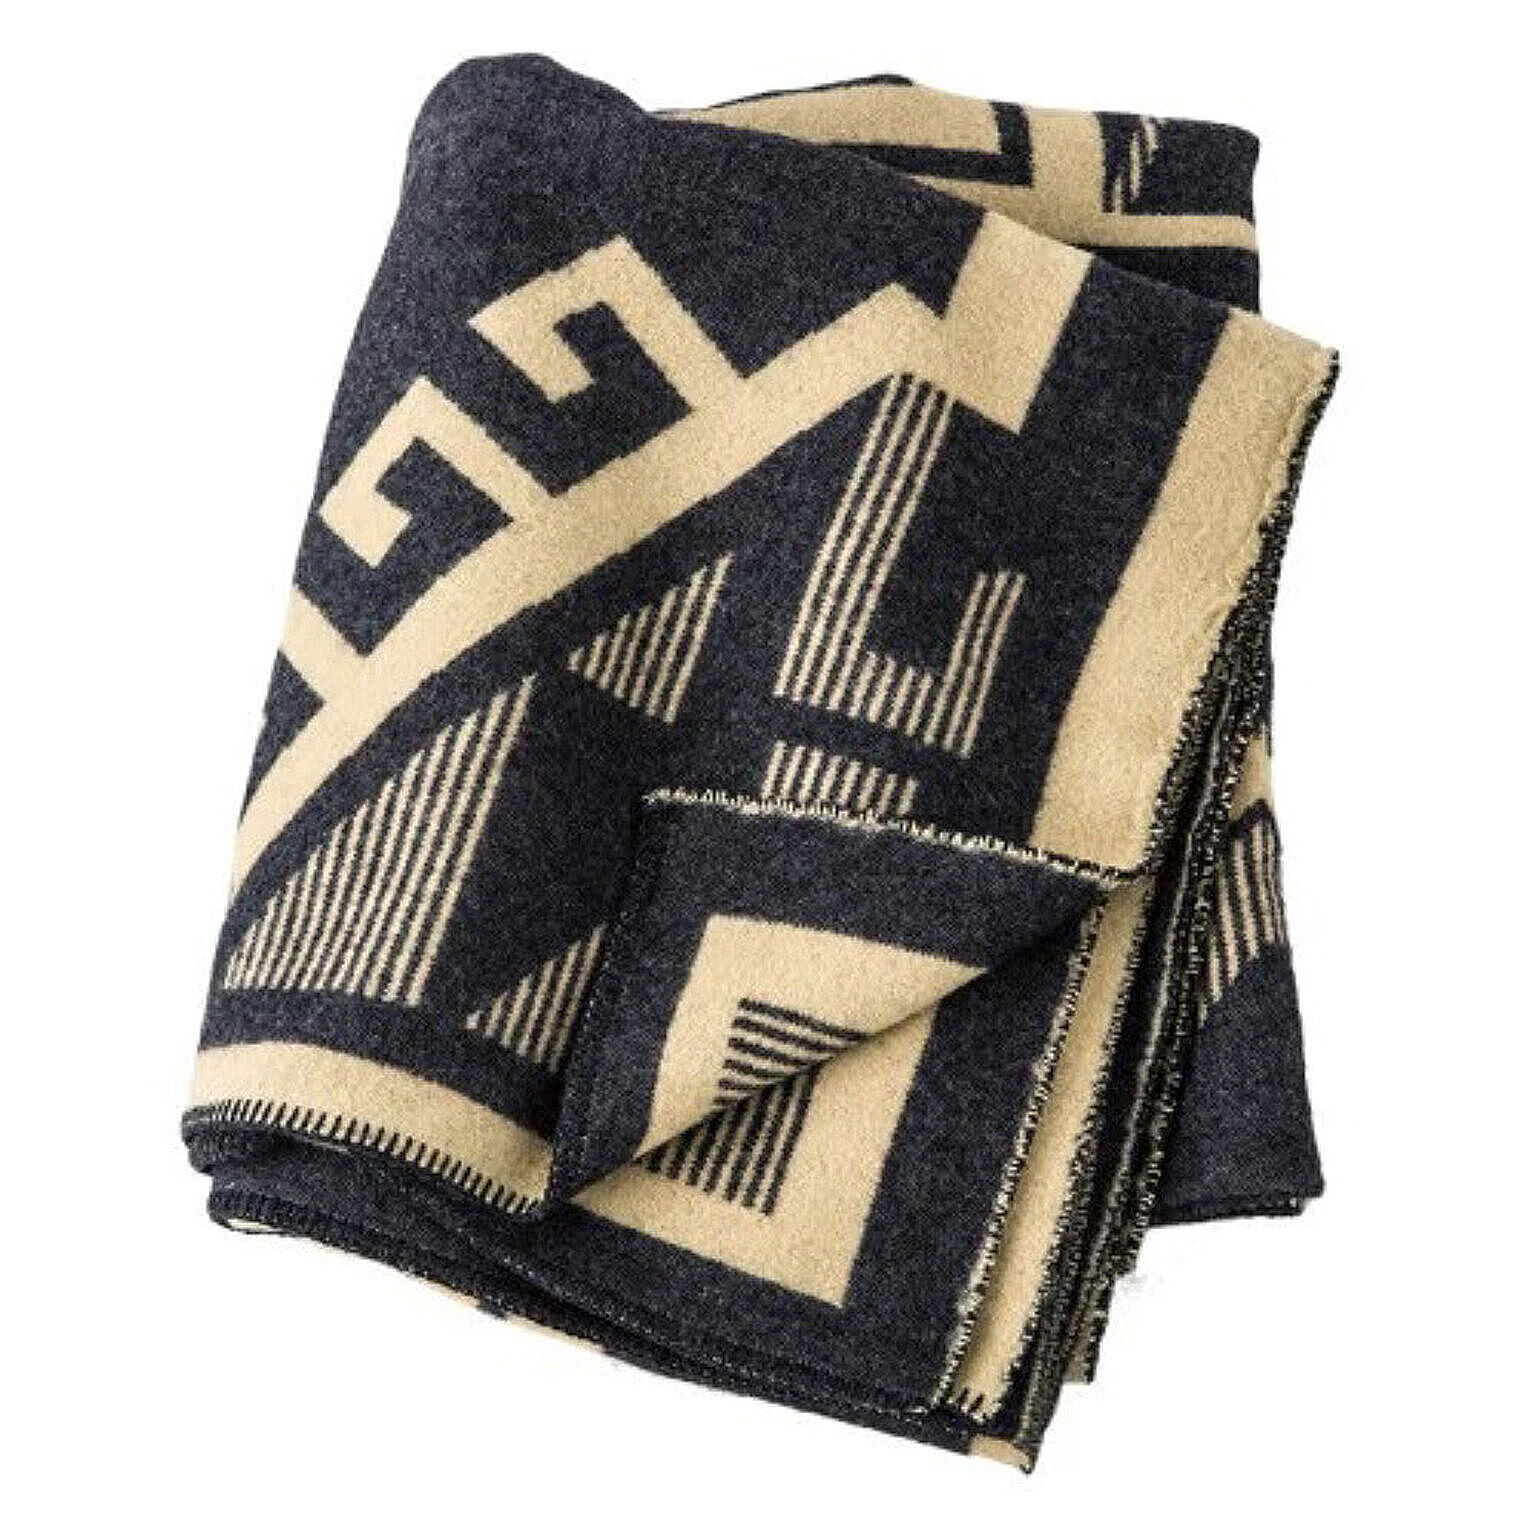 Wool Blanket / Jacquard CHARCOAL GRAY